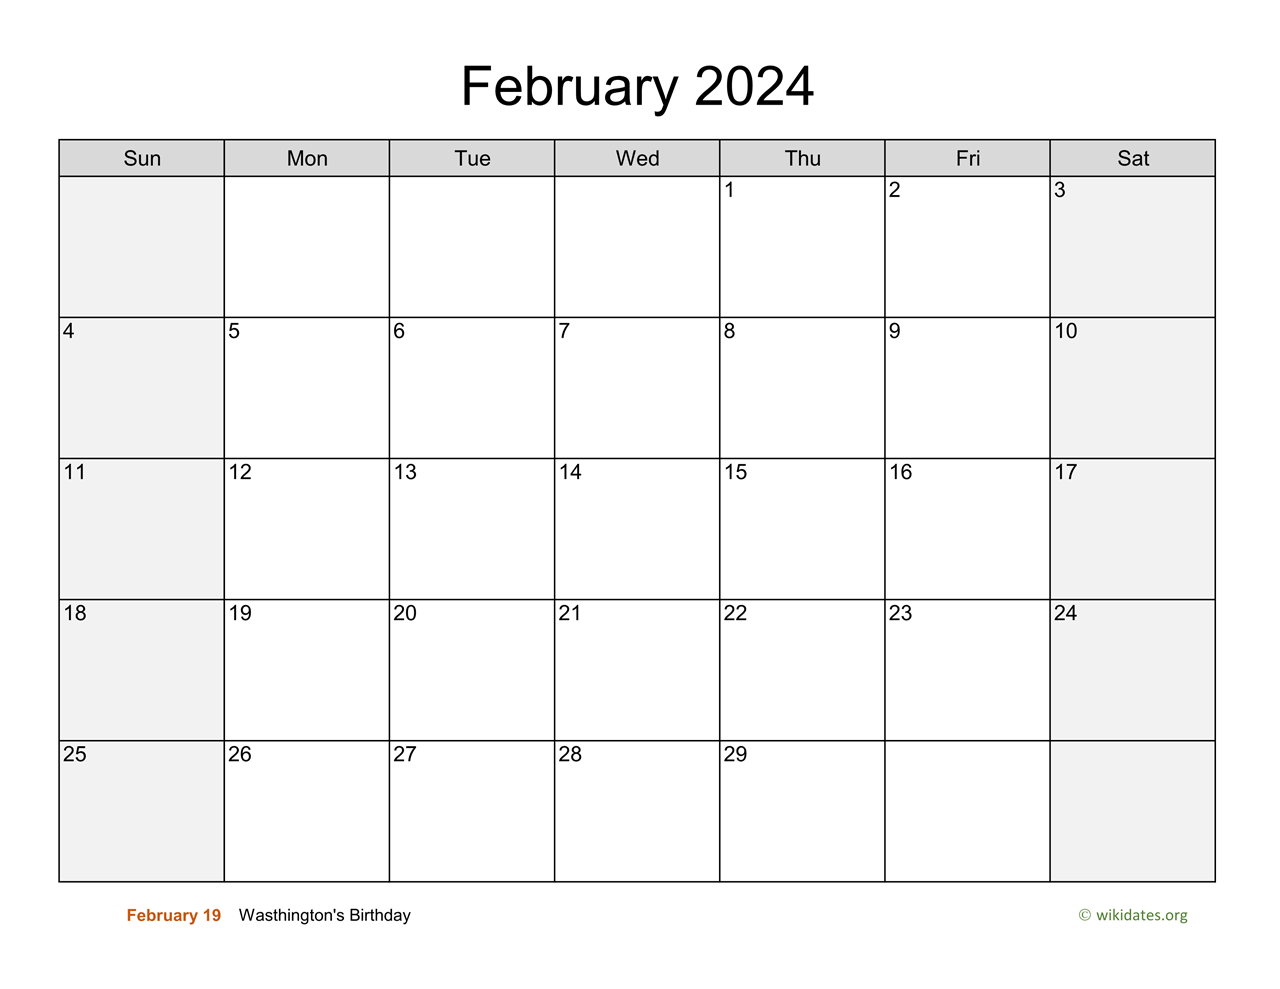 February 2024 Calendar with Weekend Shaded